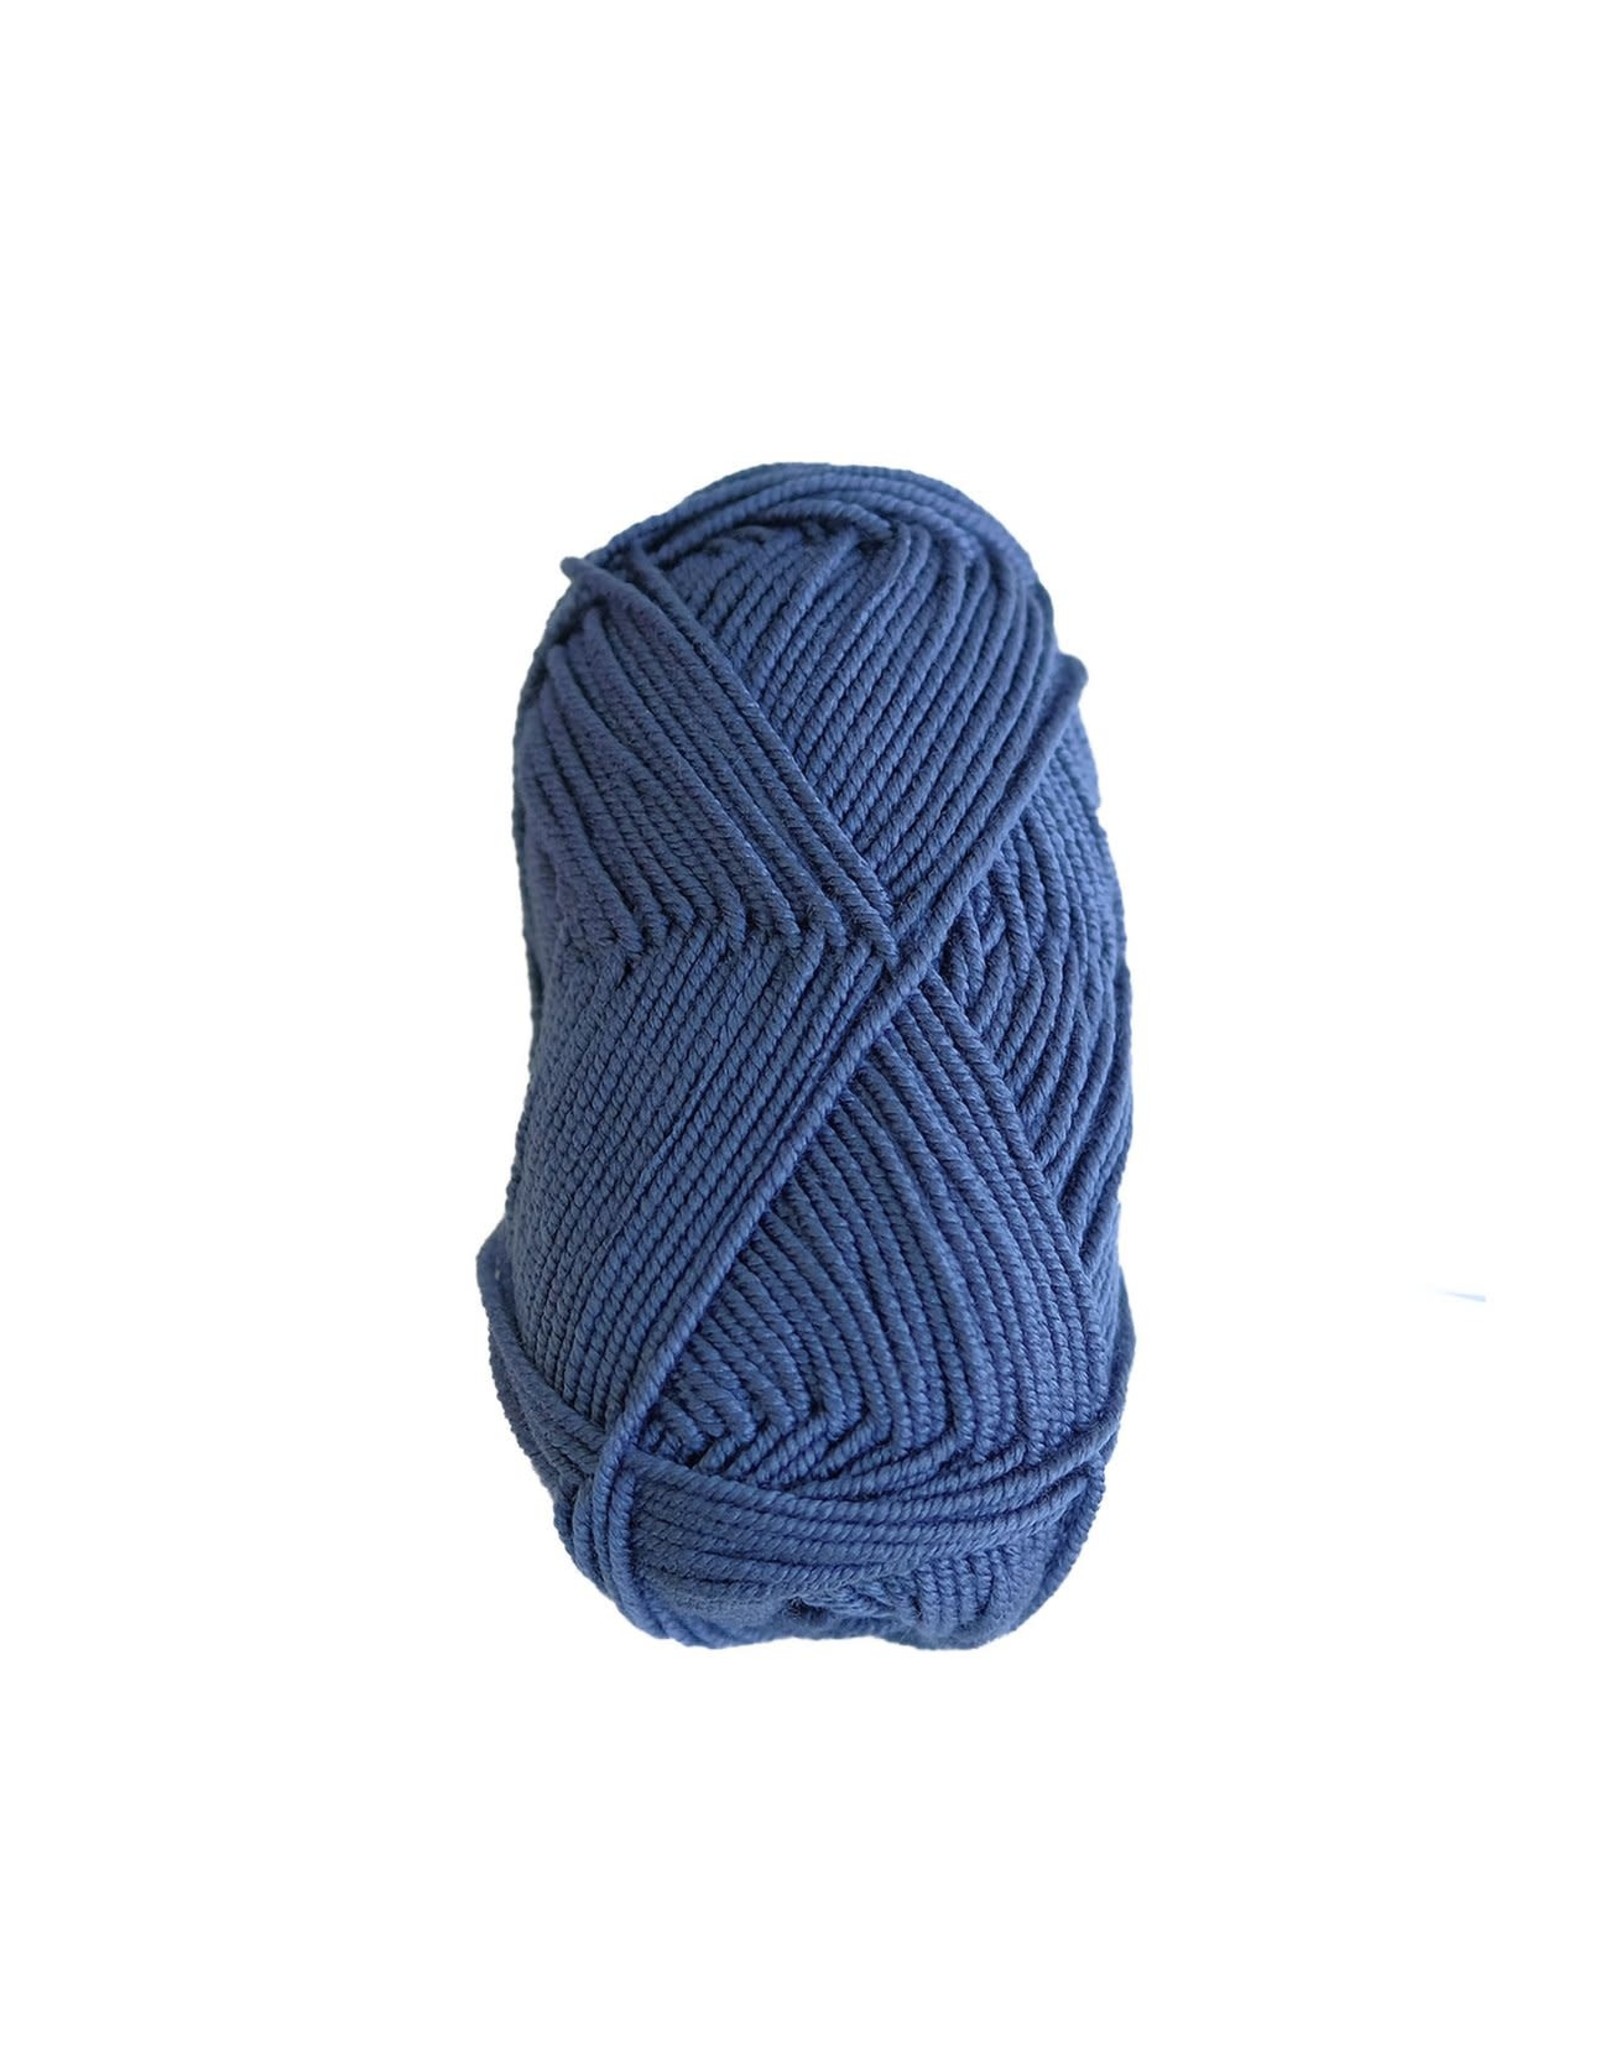 Knit One Crochet Too Nautika by Knit One Crochet Too